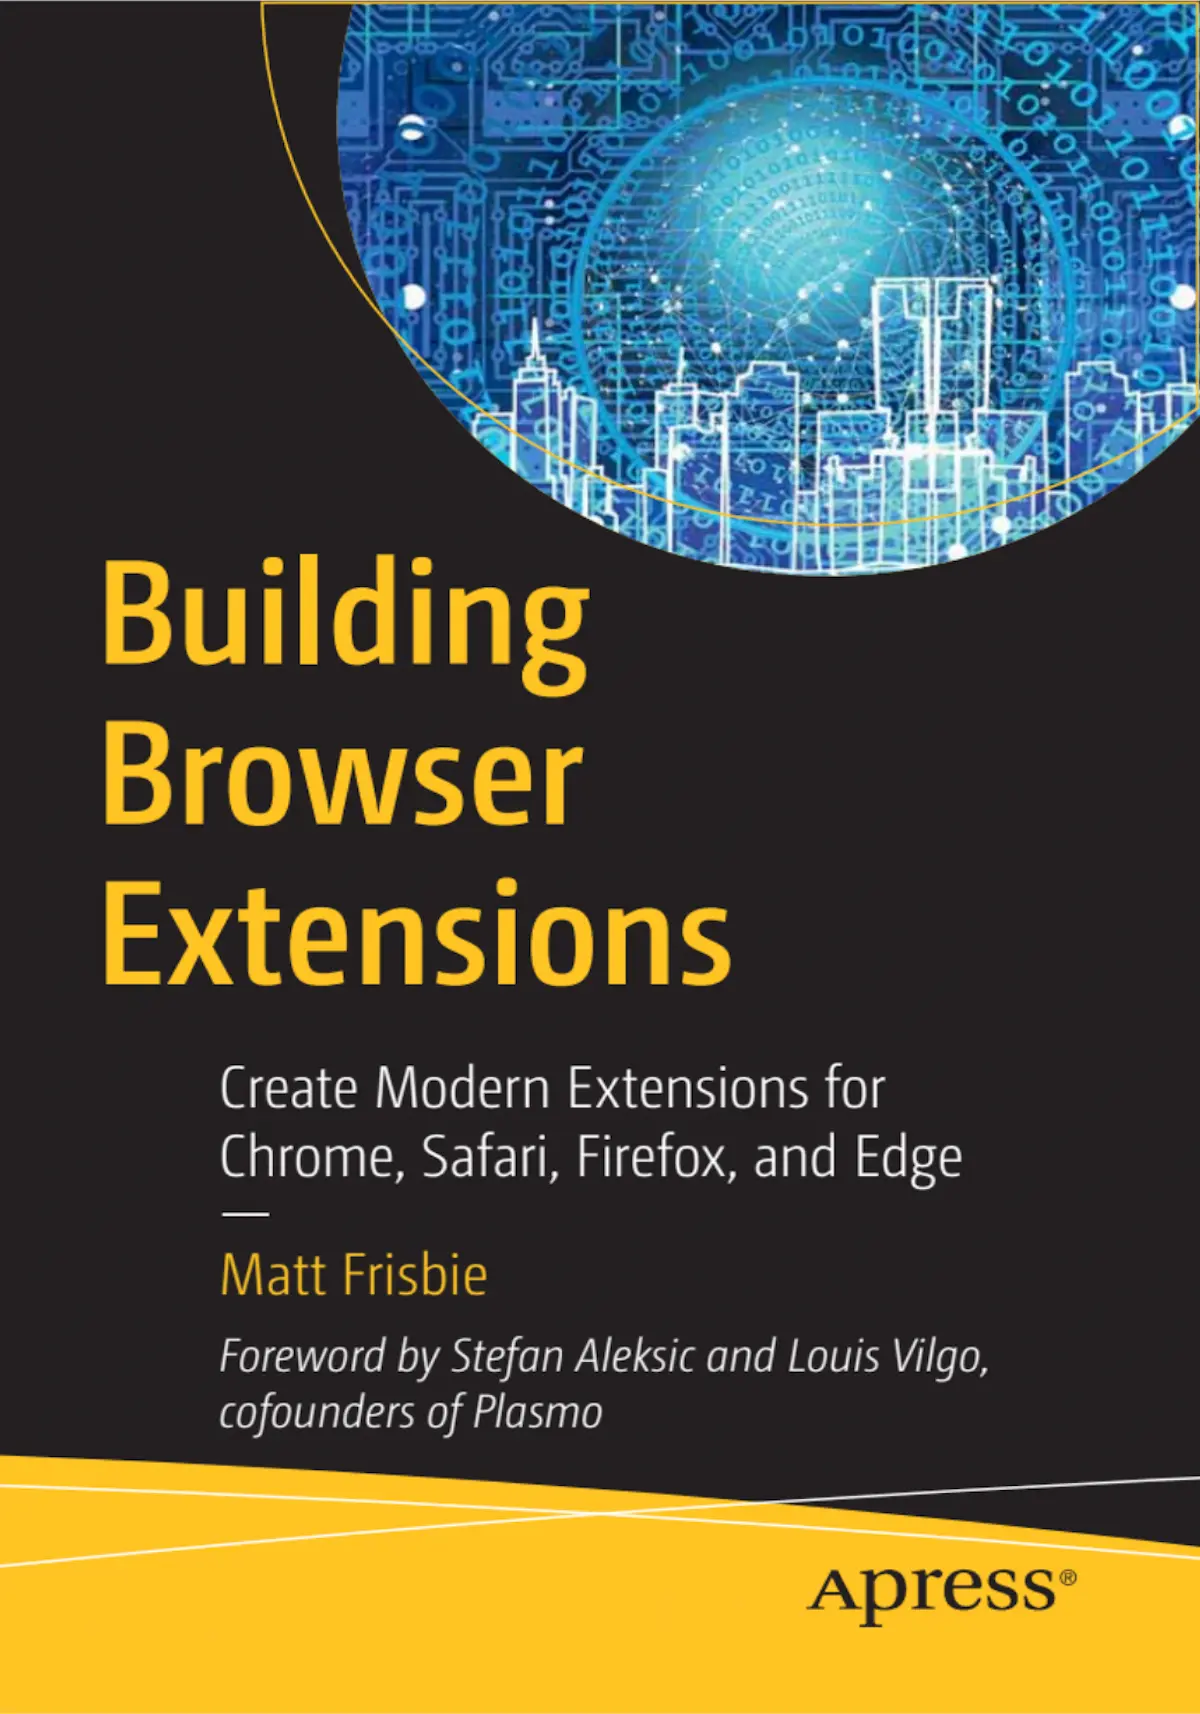 Building Browser Extensions by Matt Frisbie